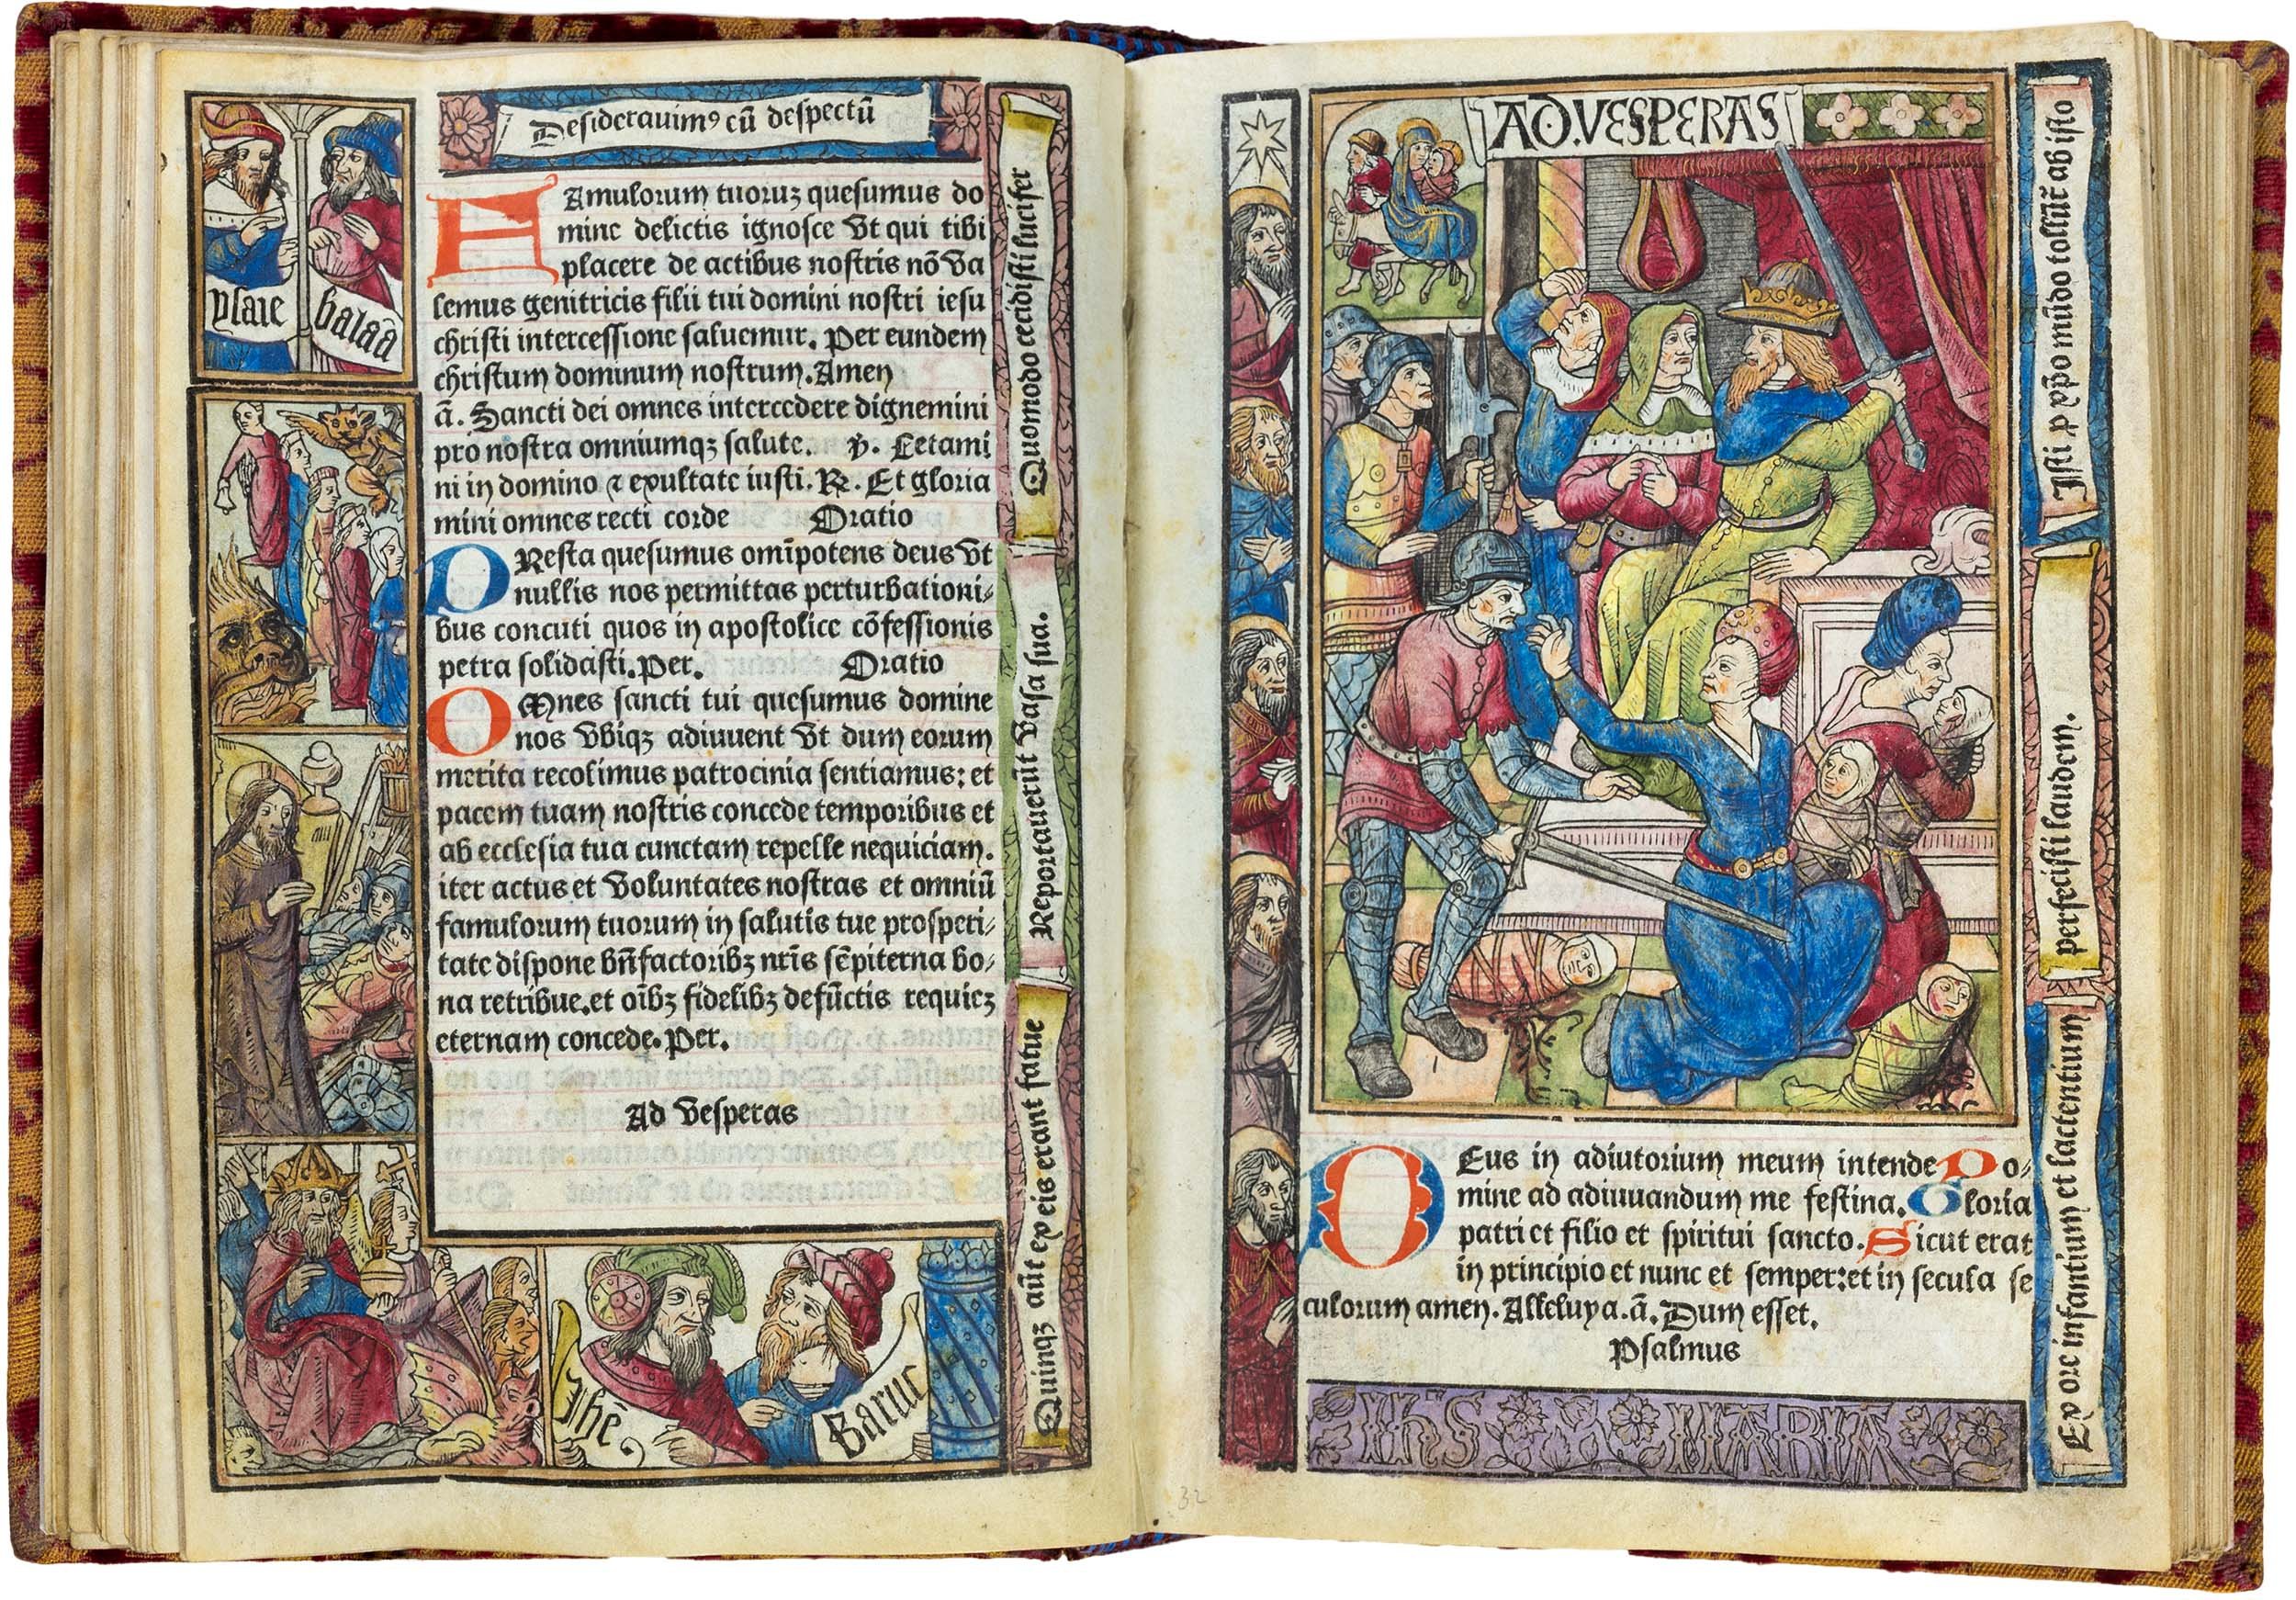 horae-bmv-8.10.1488-dupre-verard-printed-book-of-hours-illuminated-vellum-copy-king-charles-viii-34.jpg